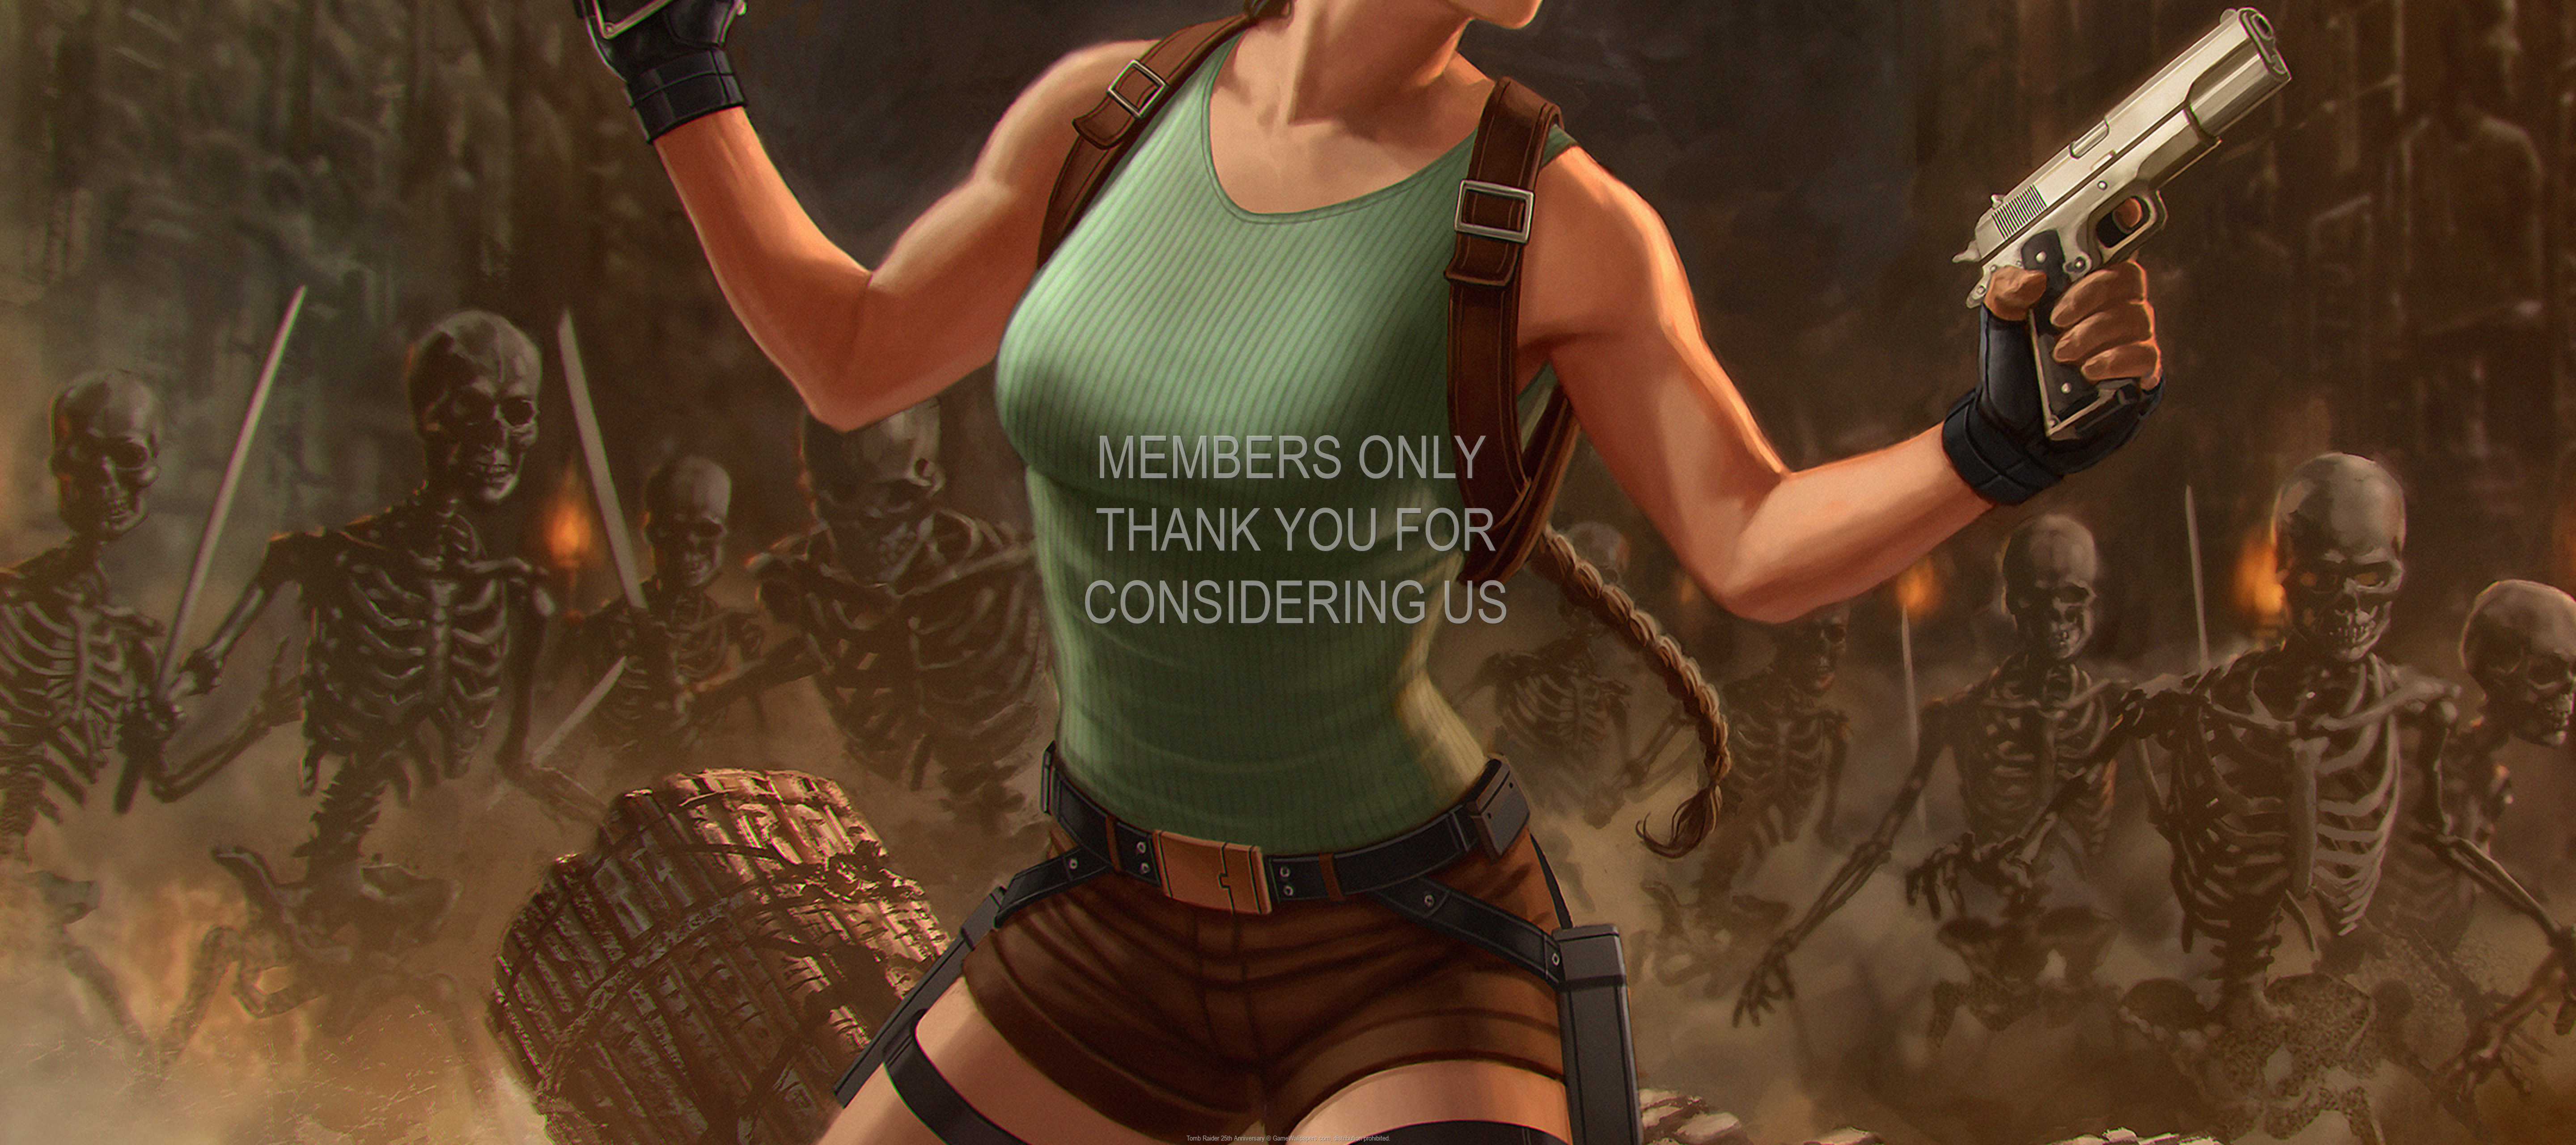 Tomb Raider 25th Anniversary 1440p%20Horizontal Mobile wallpaper or background 02